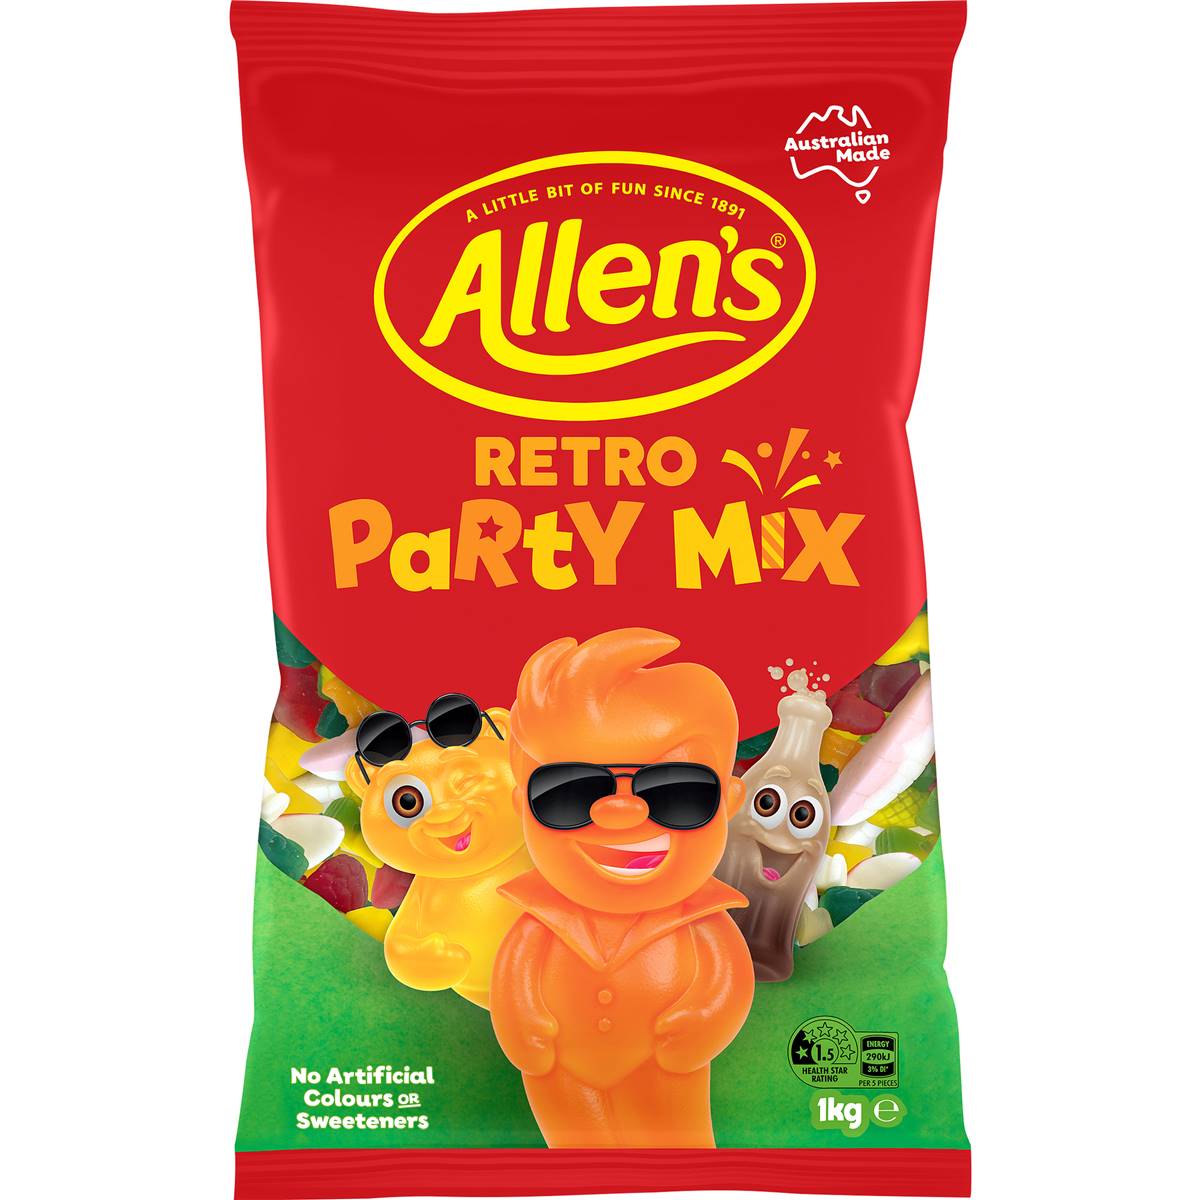 Calories in Allen's Retro Party Mix